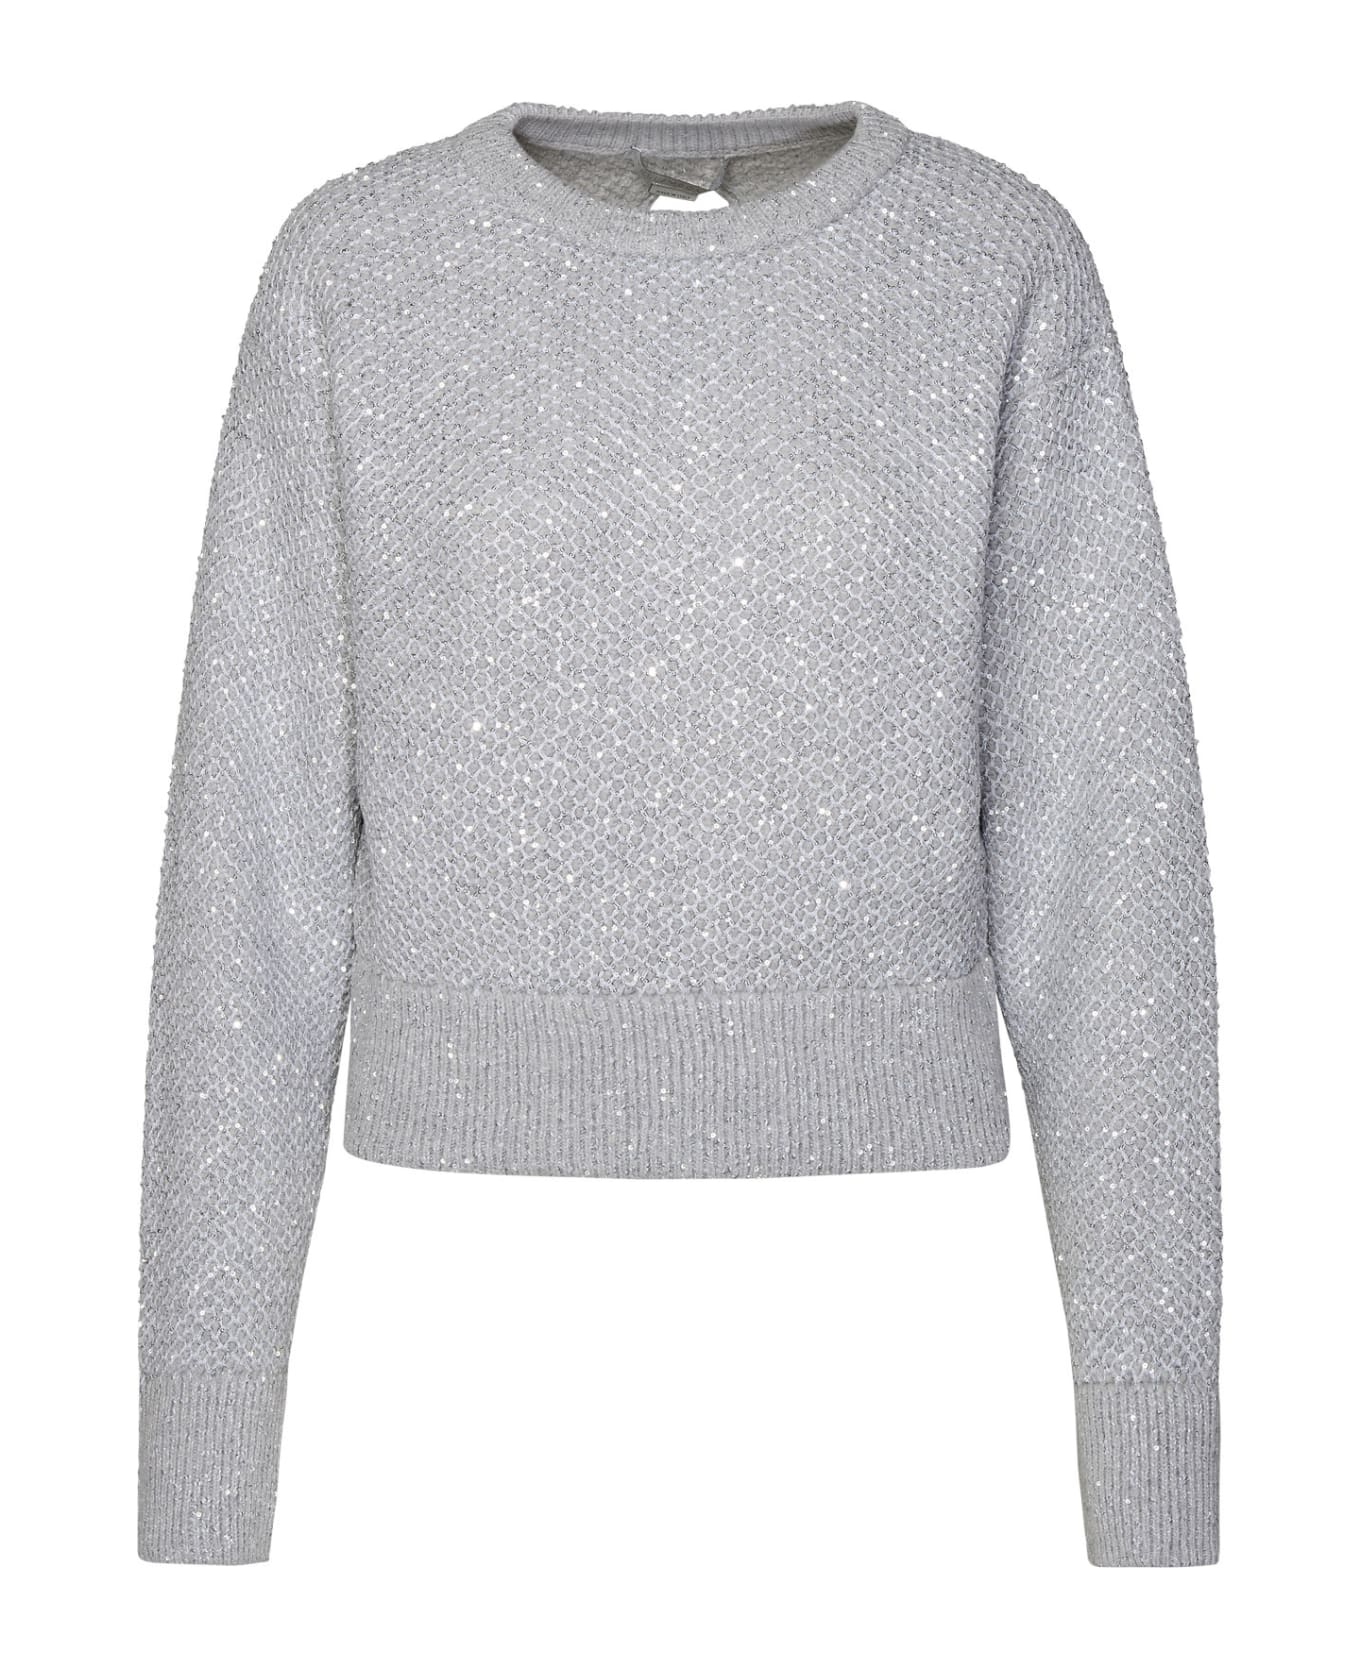 Stella McCartney Grey Wool Blend Sweater - Grey